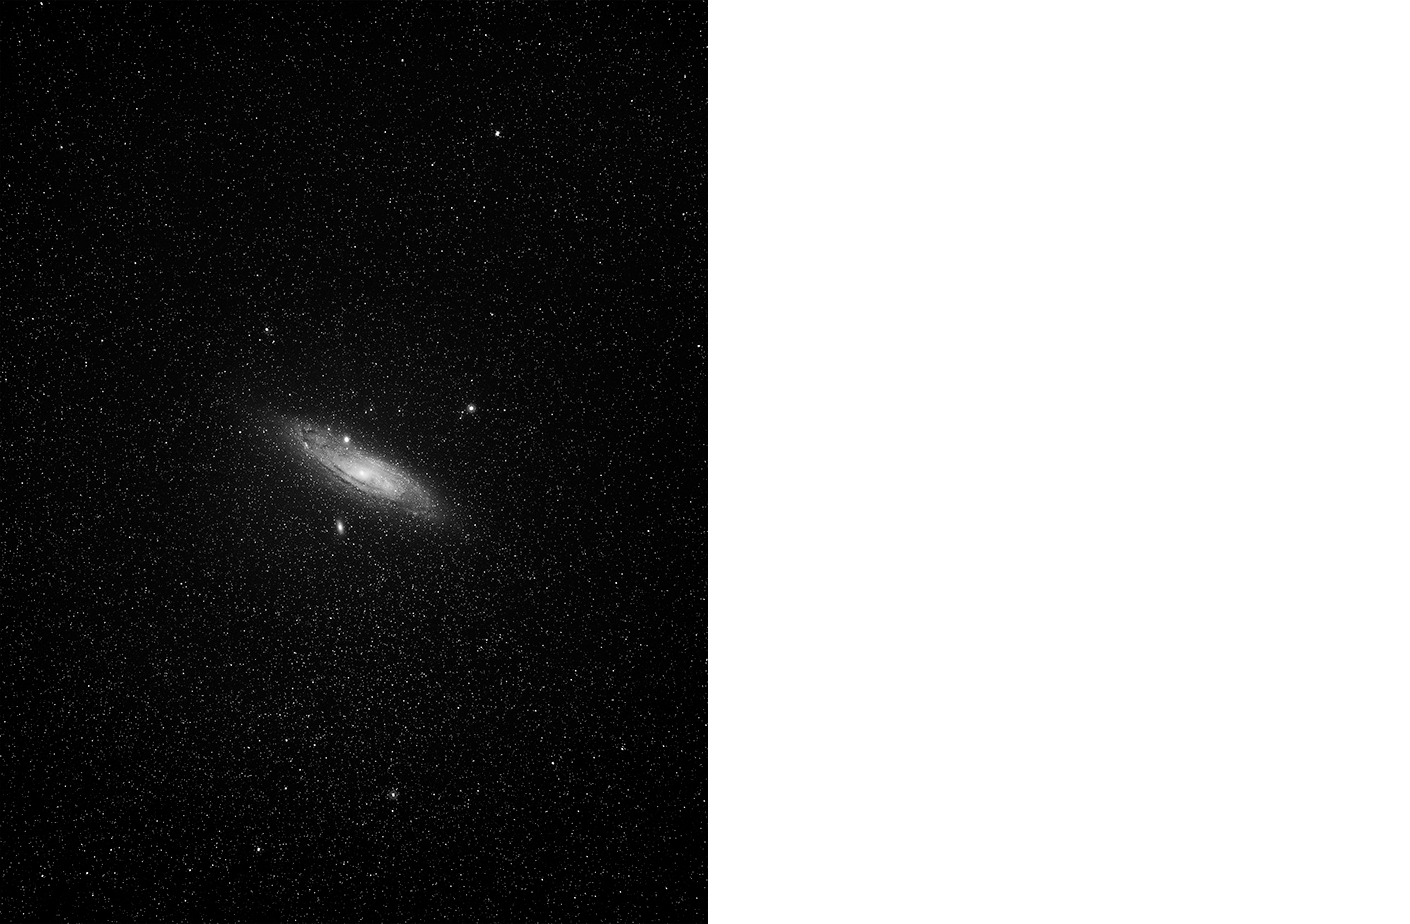  7054-01 Skies - Andromeda  Platinum Palladium Print 17.17 x 22.00 inch Image Size 22.00 x 29.00 Paper Size 1 BAT / 1 PP /&nbsp;2 AP / 12 EDP 